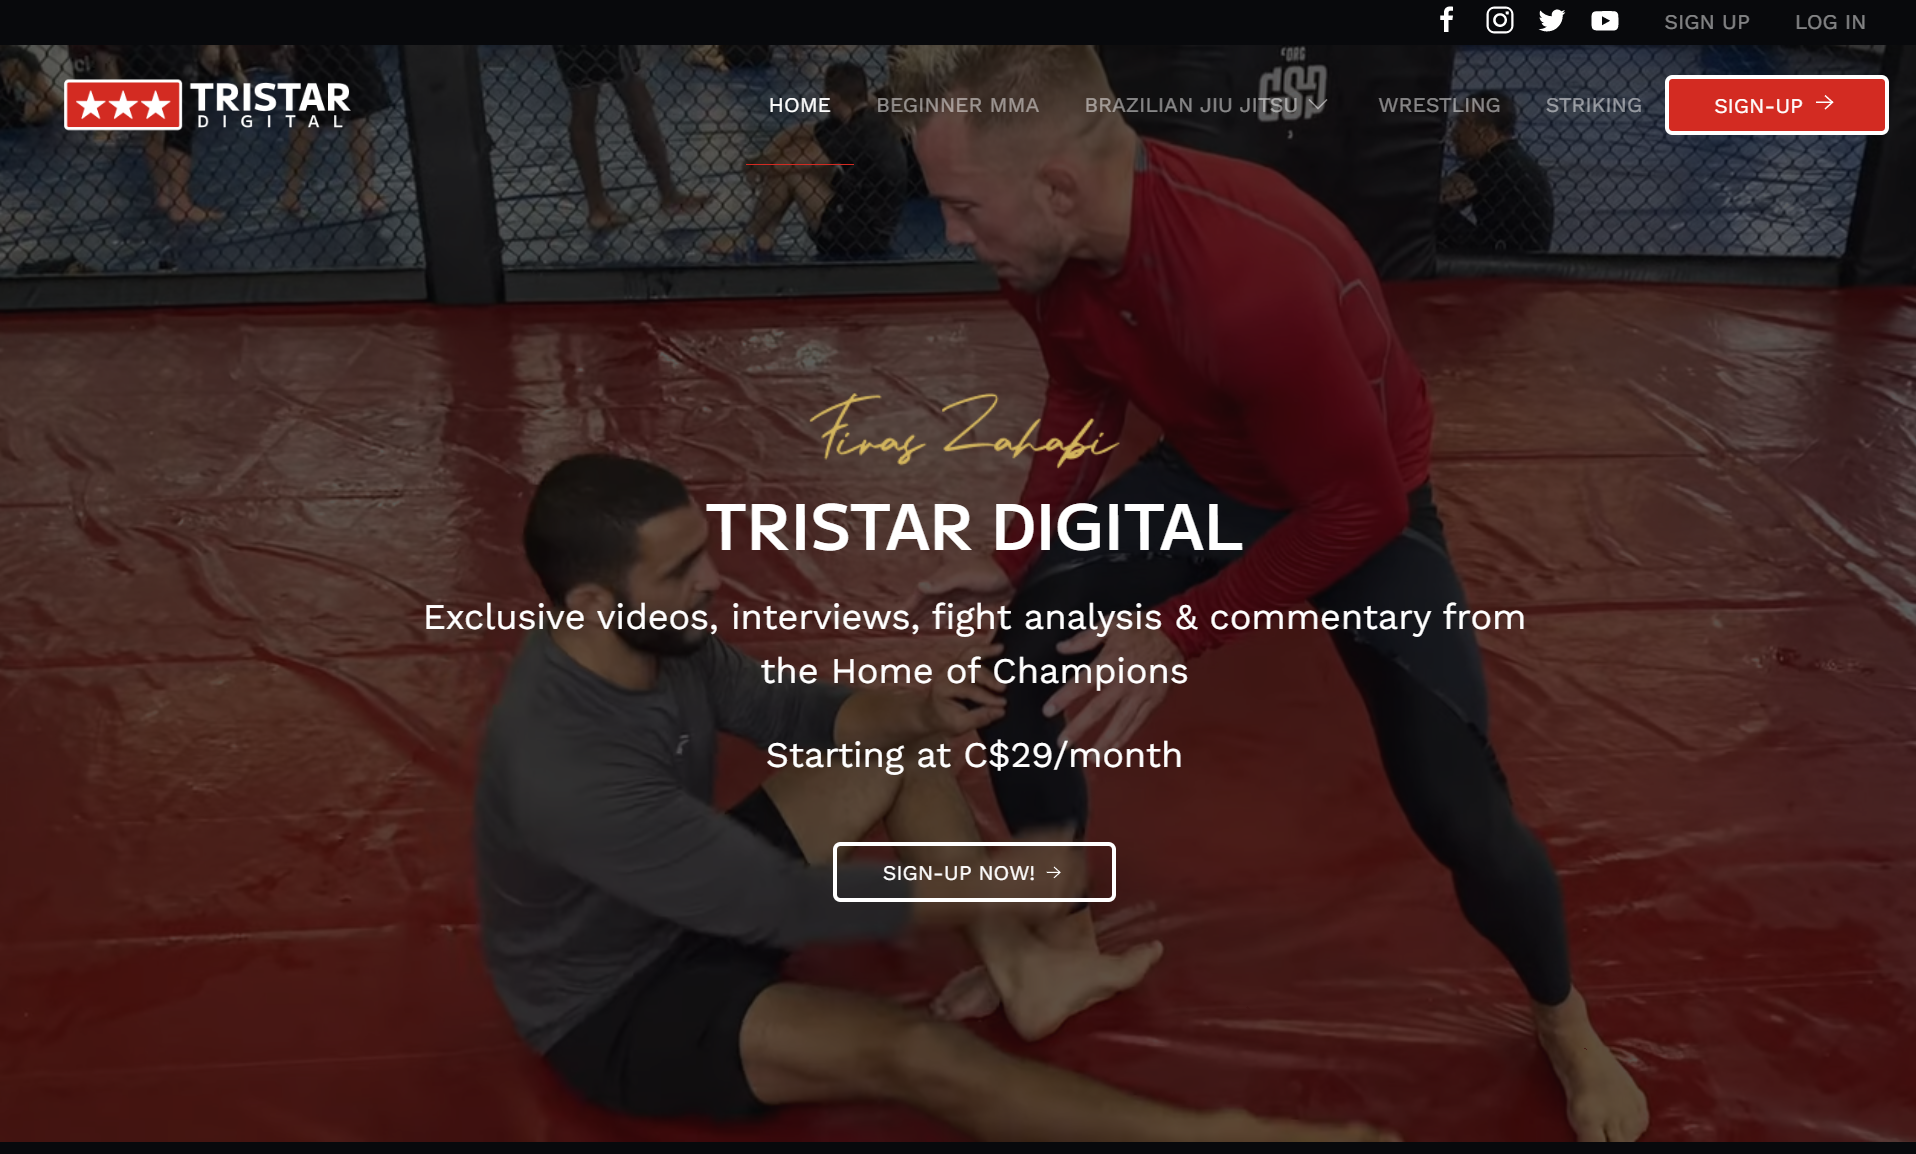 Tristar Gym Digital Subscription Train online with Coach Zahabi